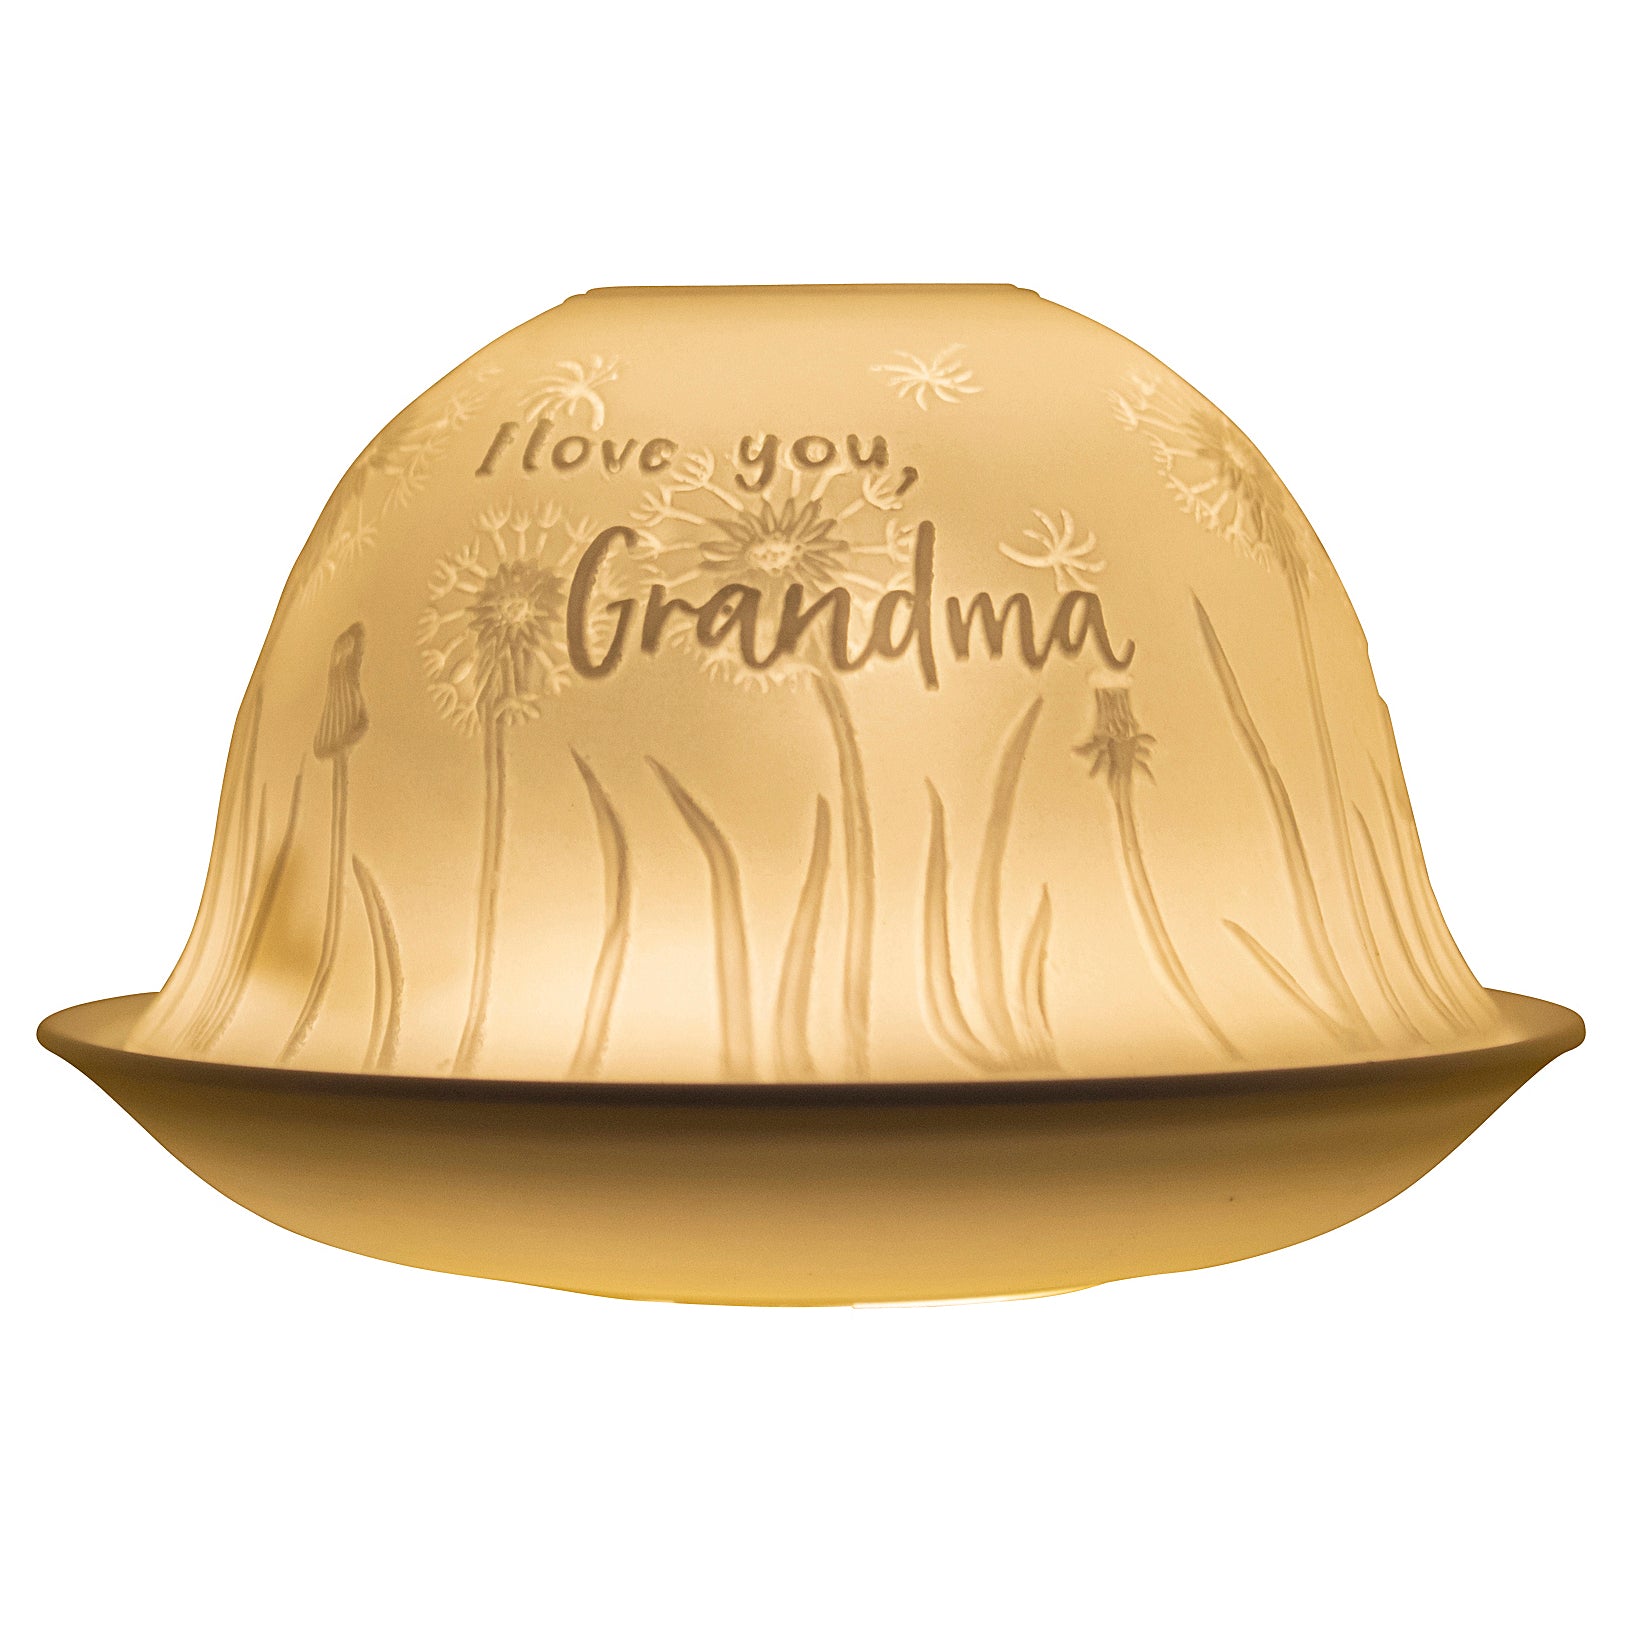 I Love You Grandma Candle Shade / Tealight Holder